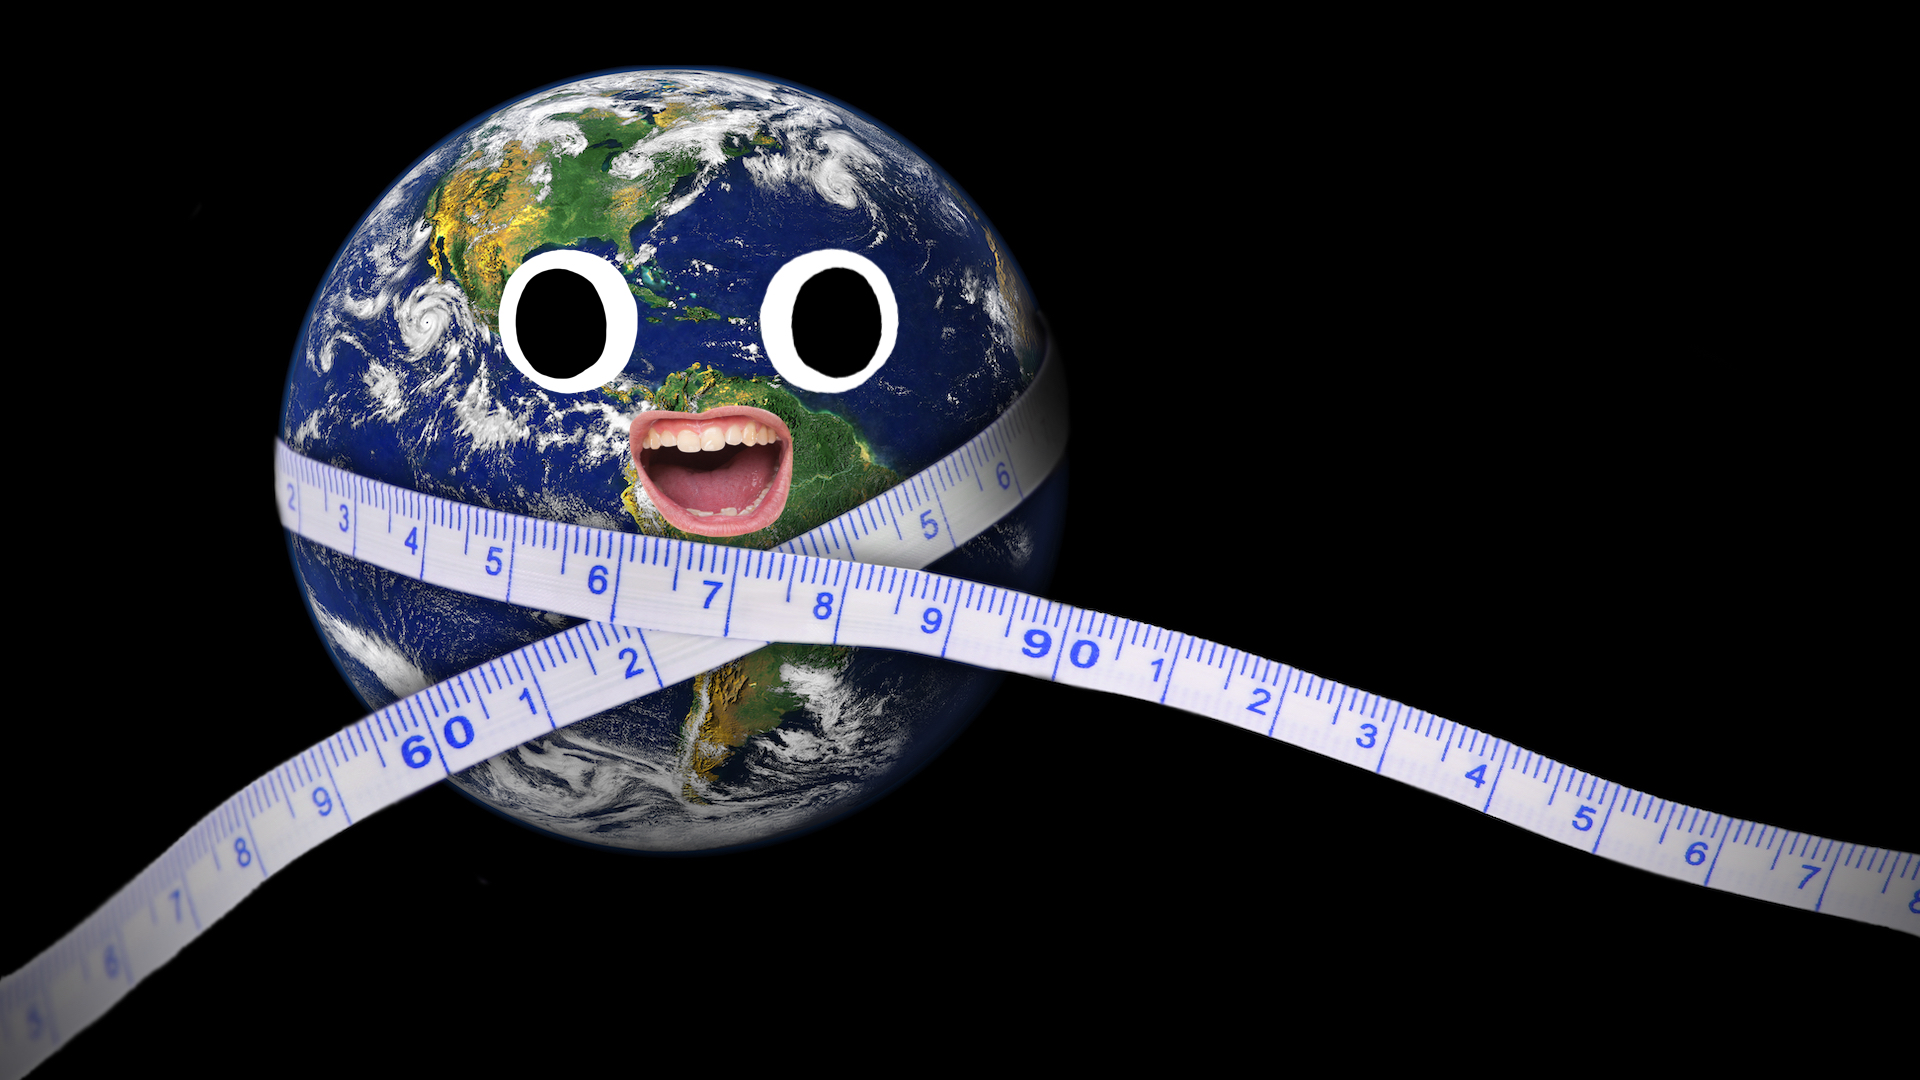 Earth measurement